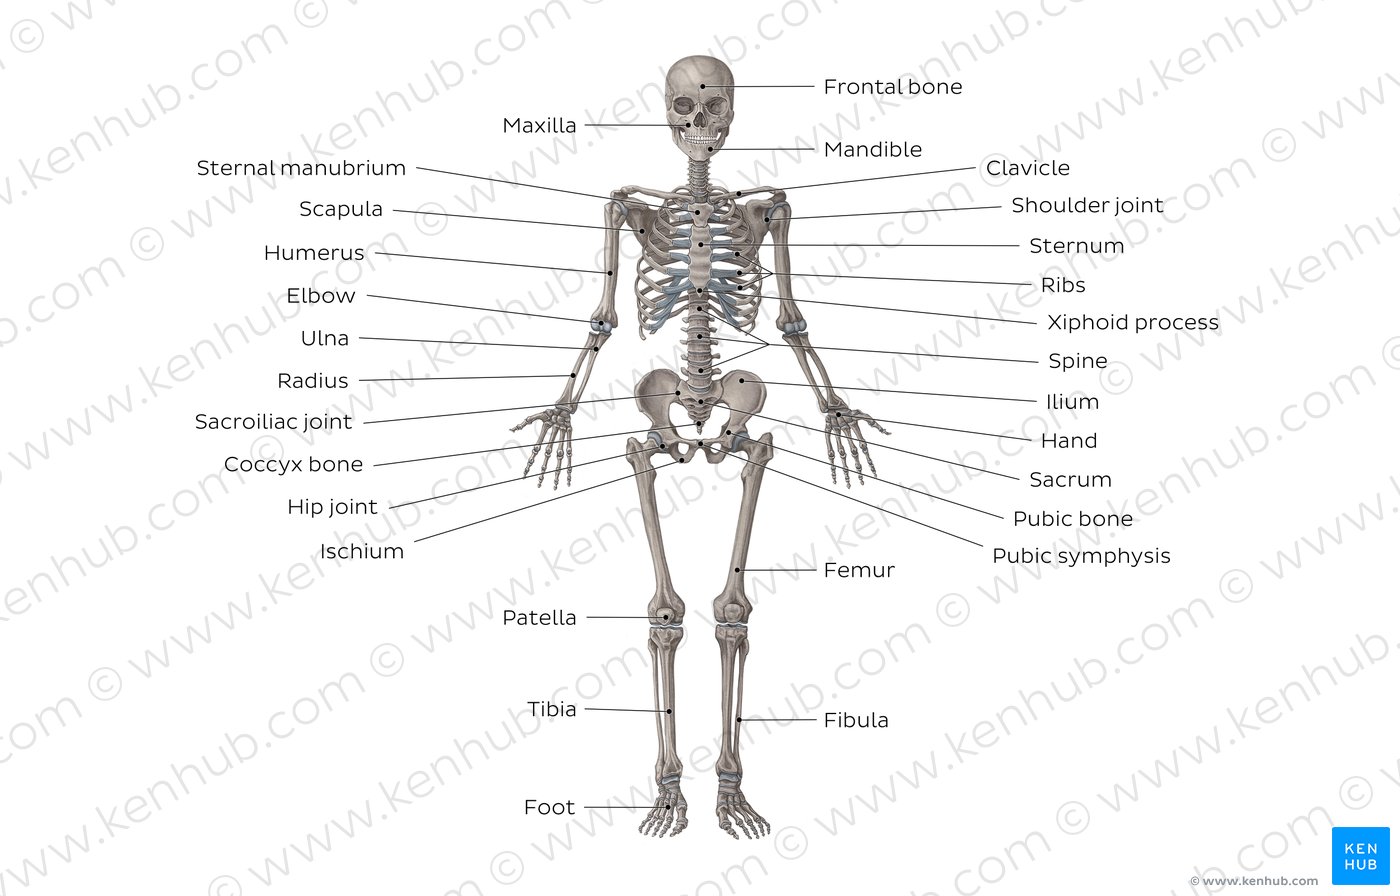 Musculoskeletal system: Main bones, joints & muscles | Kenhub